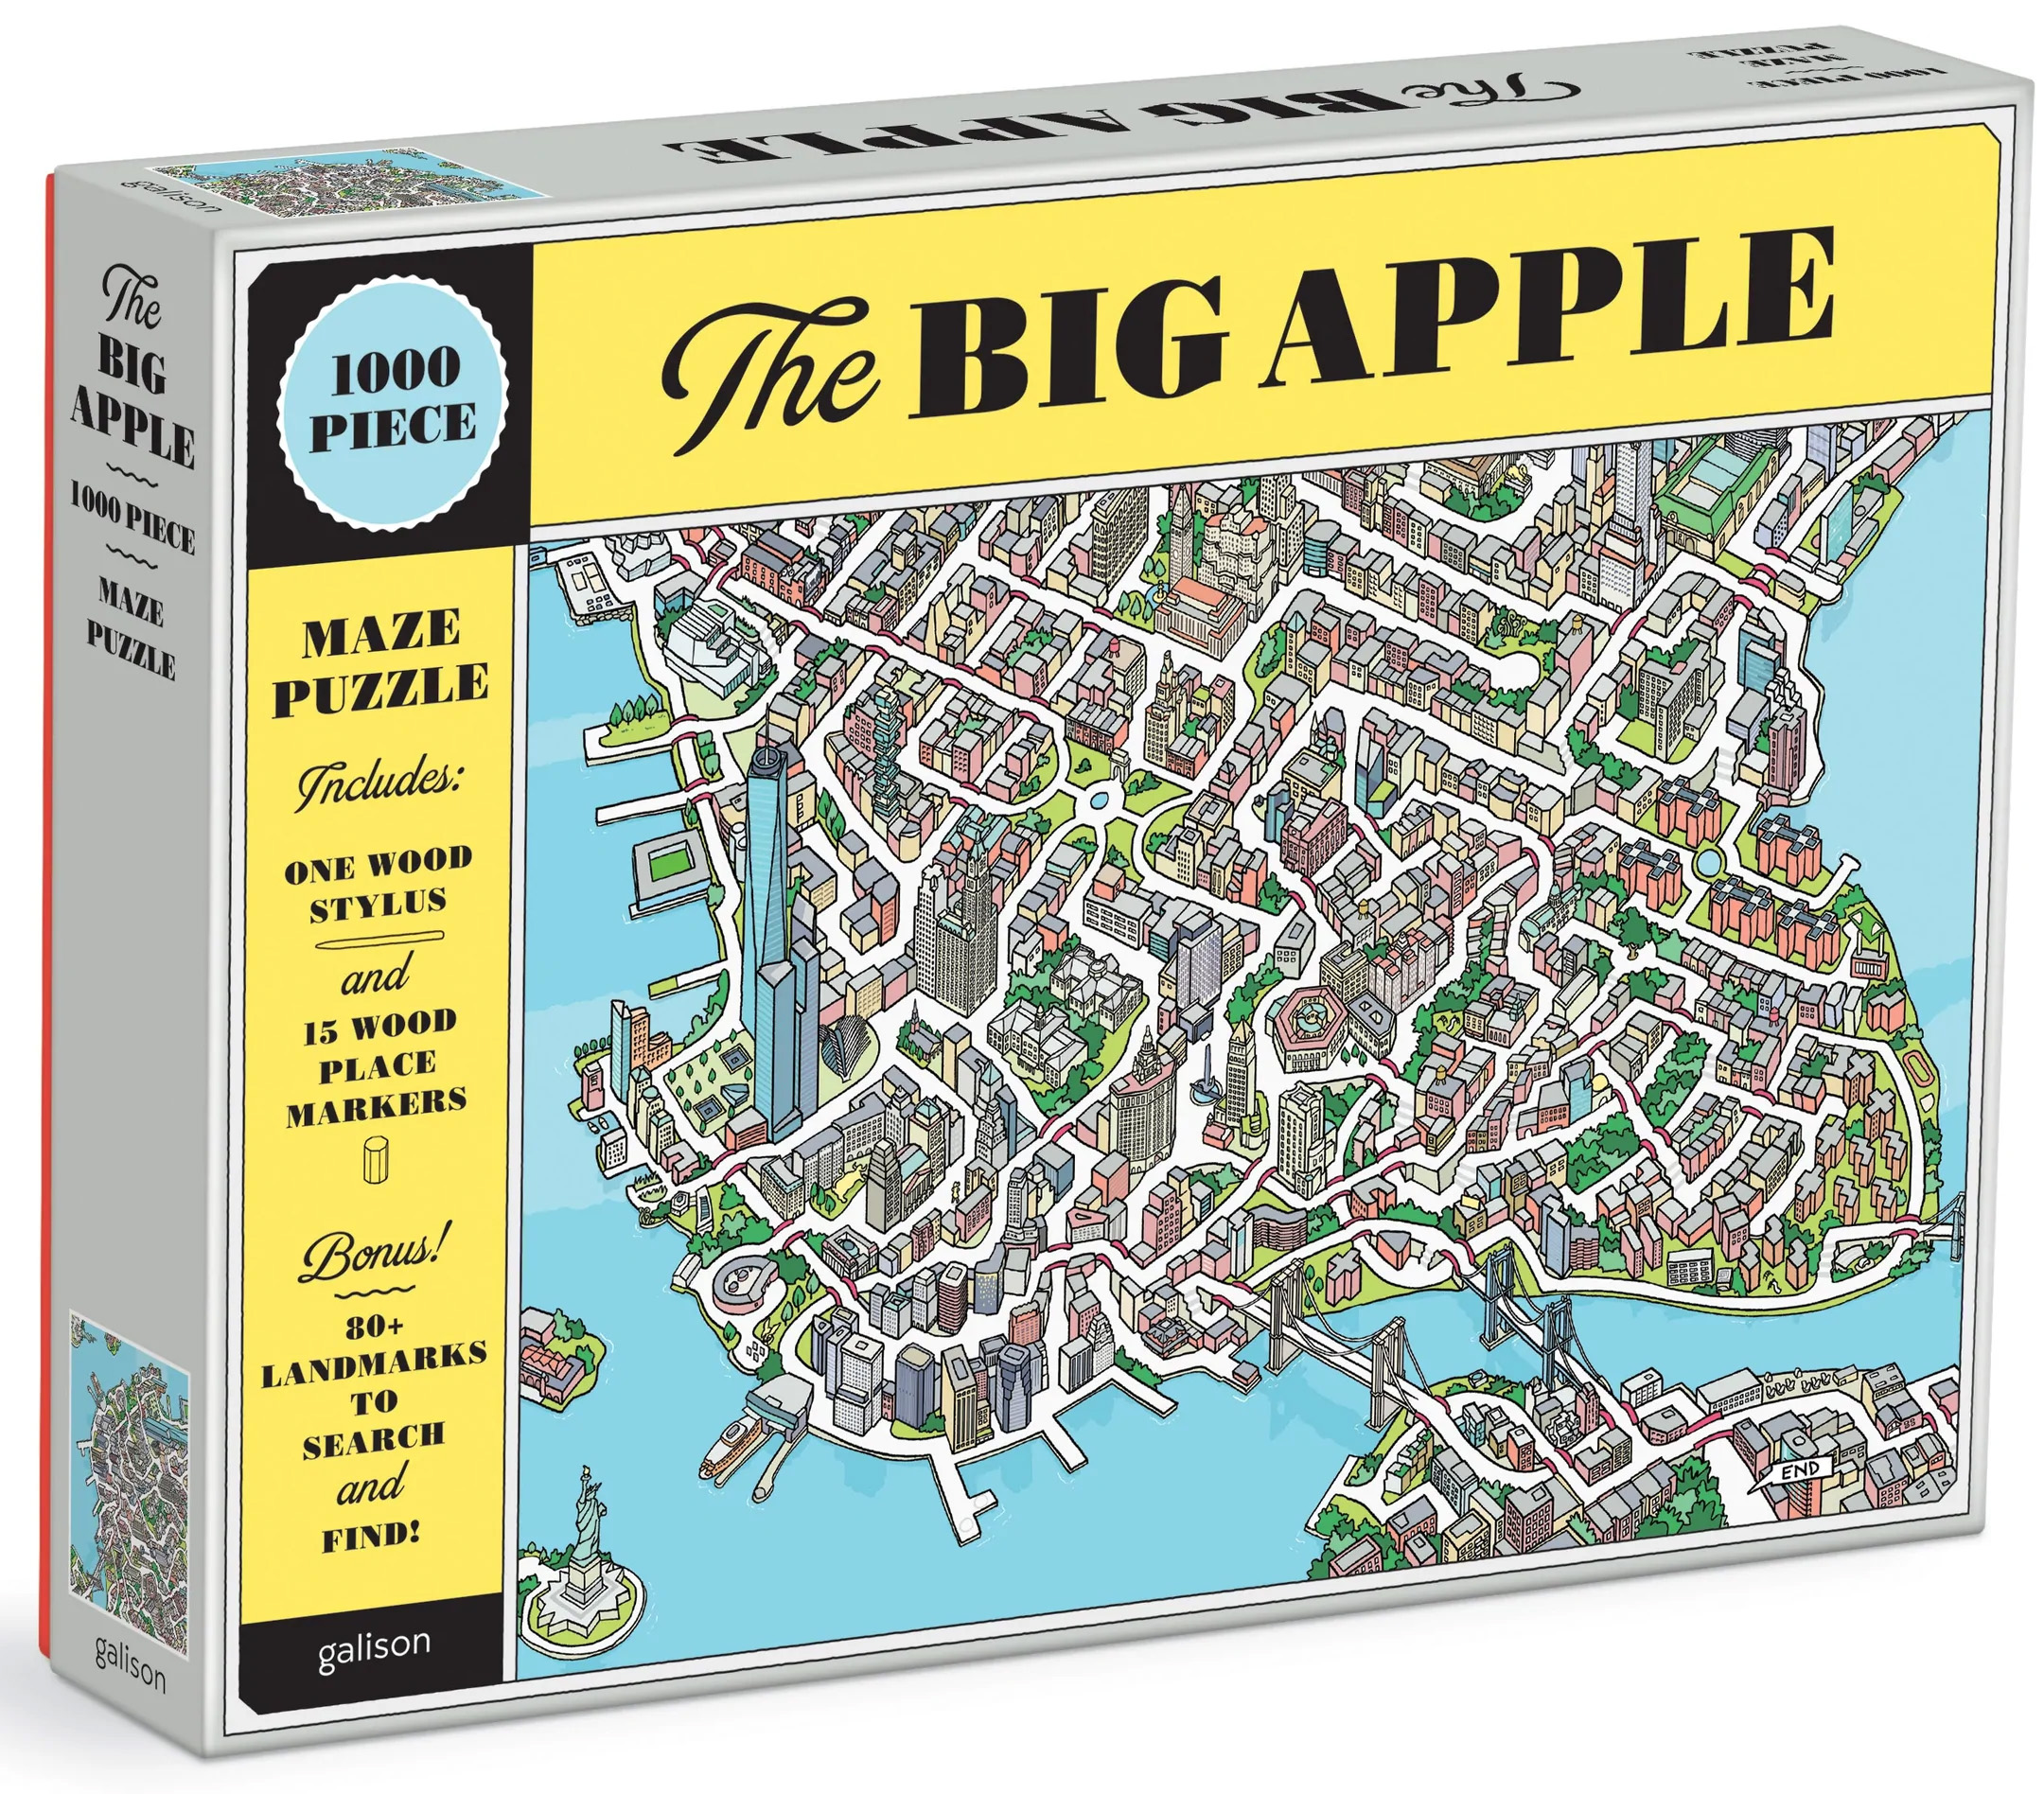 The Big Apple Maze Puzzle